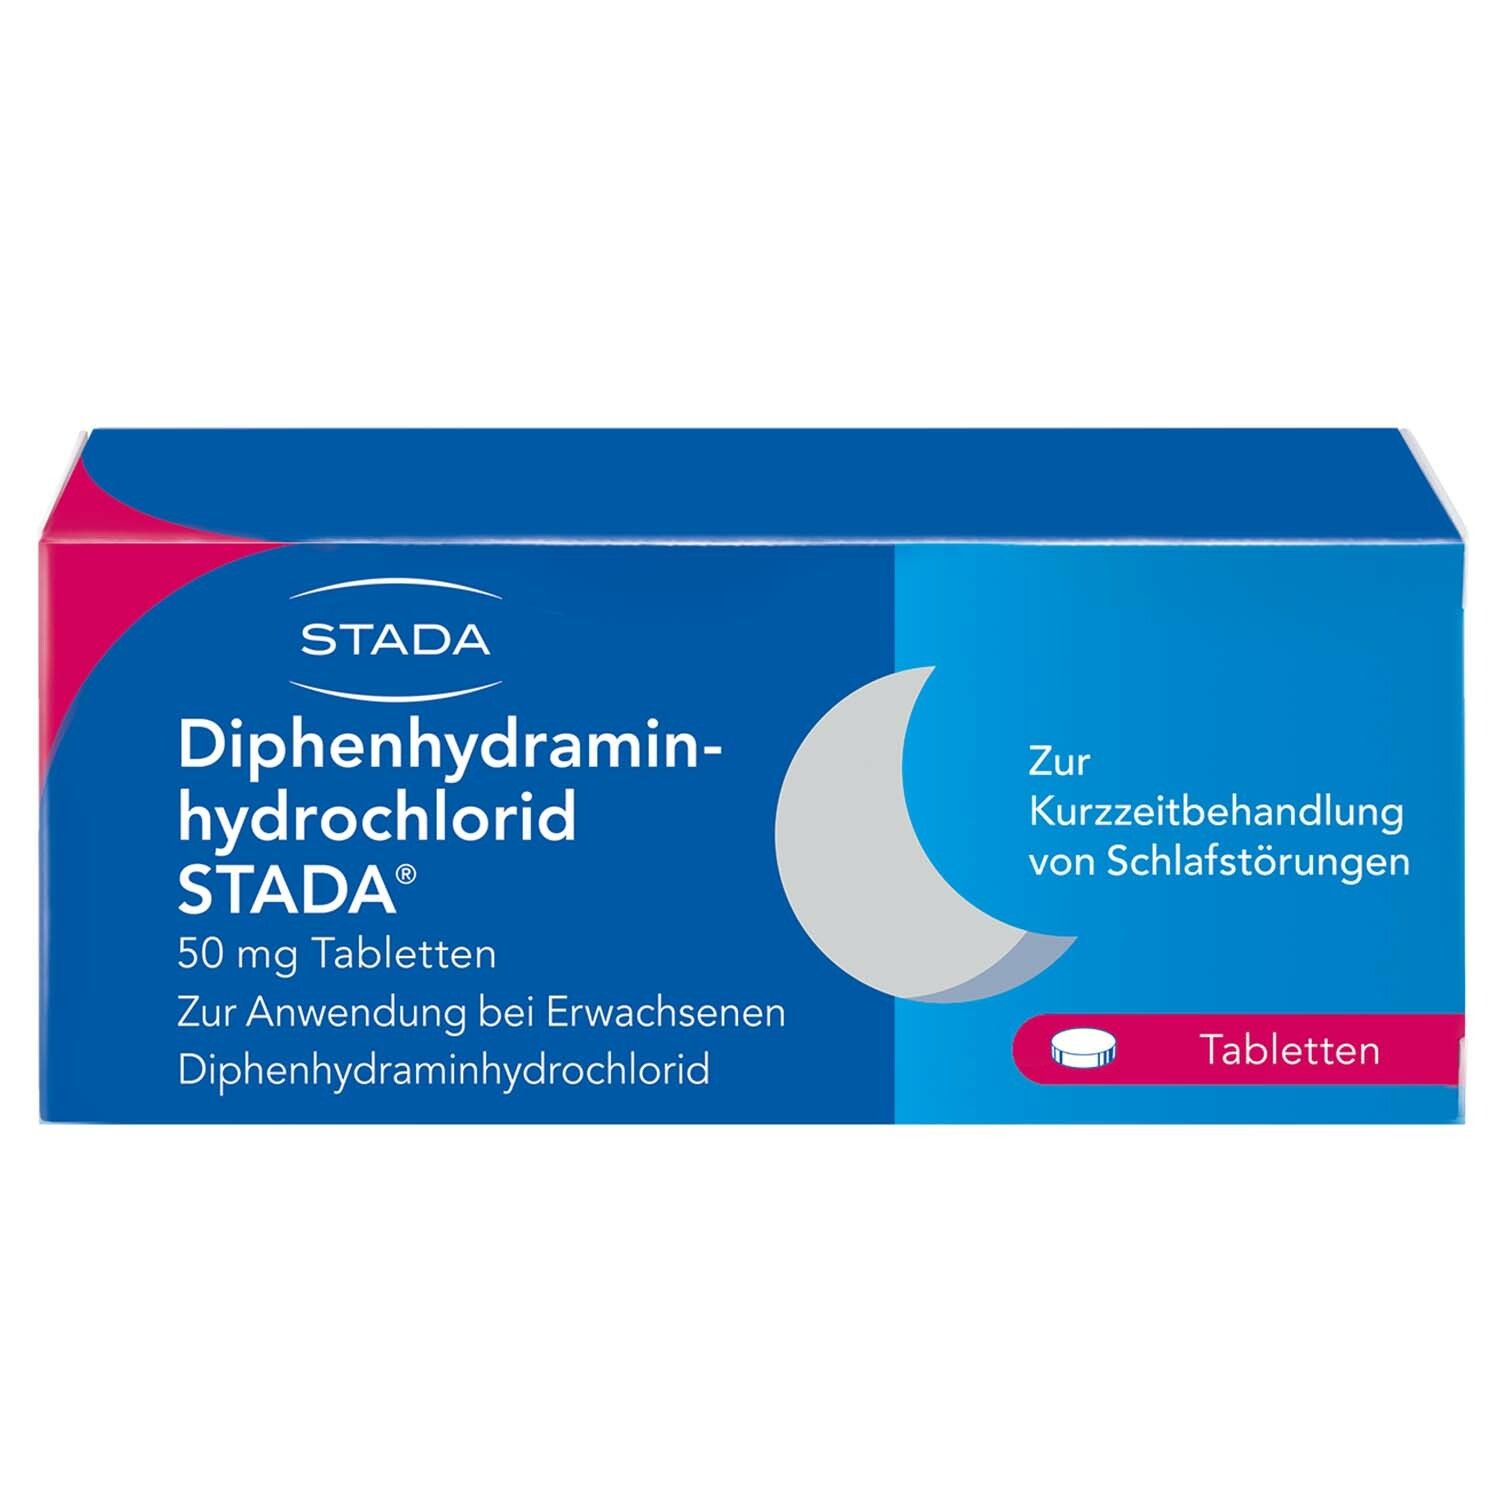 Diphenhydraminhydrochlorid Stada® 50 mg